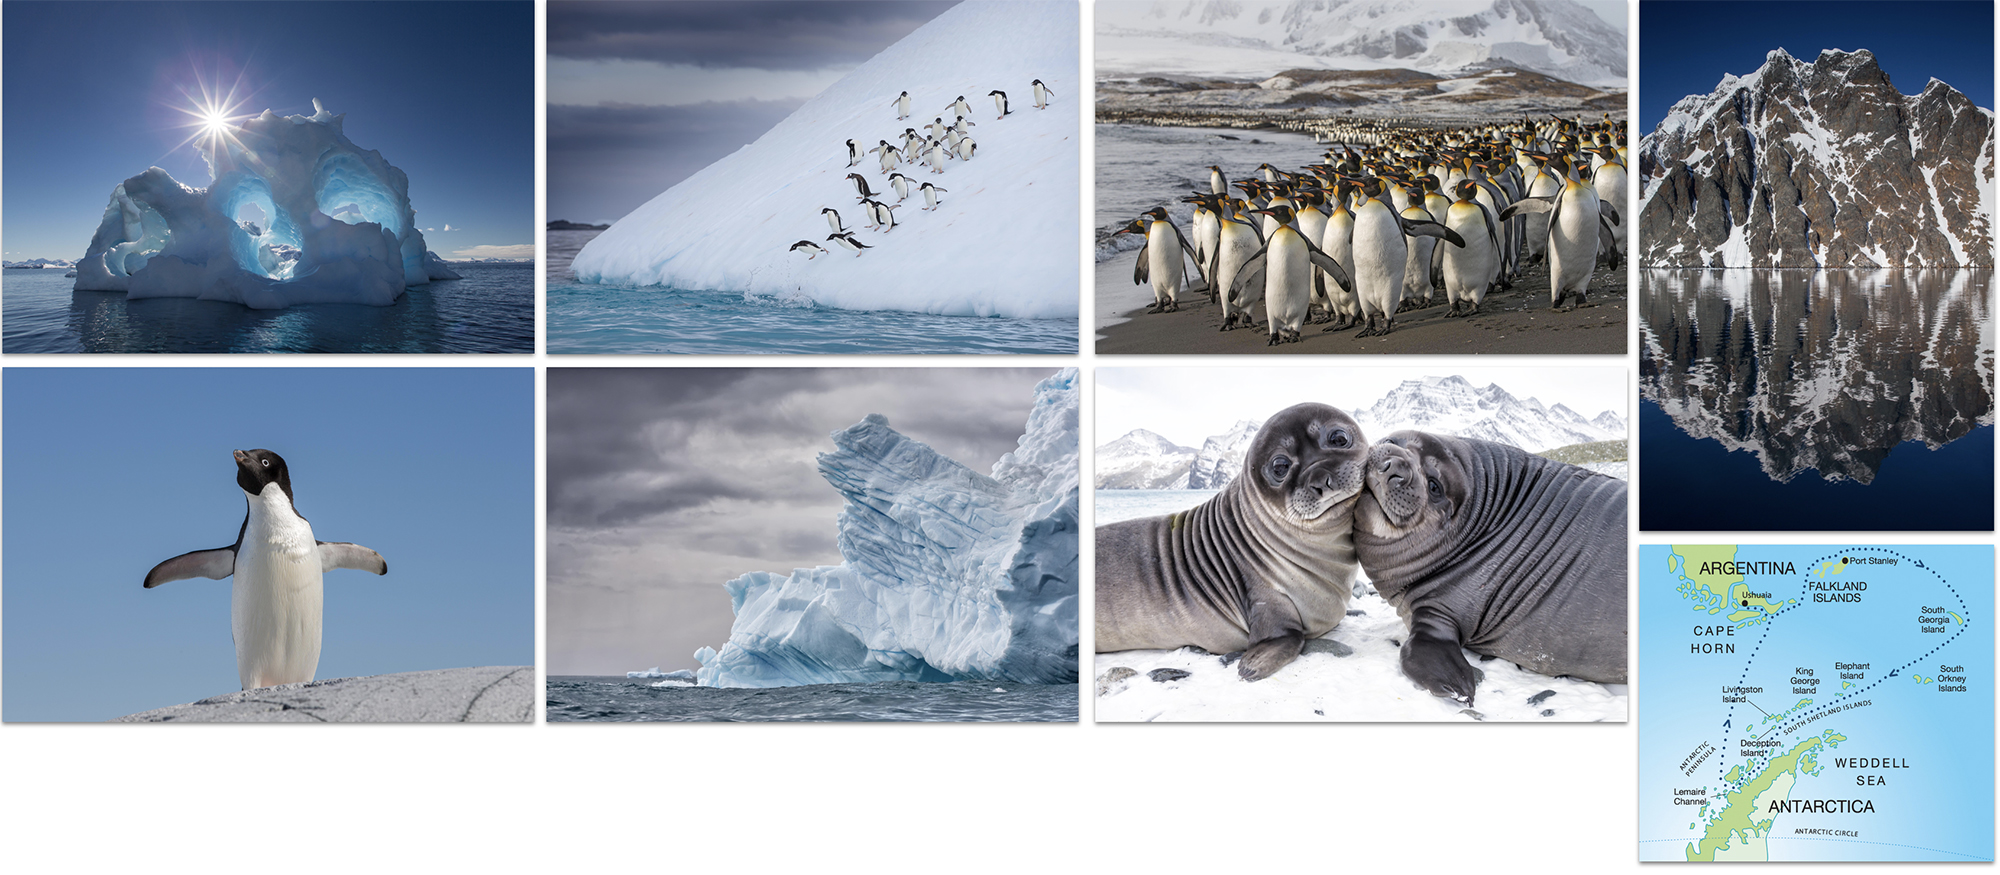 Frozen South Adventure: The Falkland Islands, South Georgia & Antarctic Peninsula